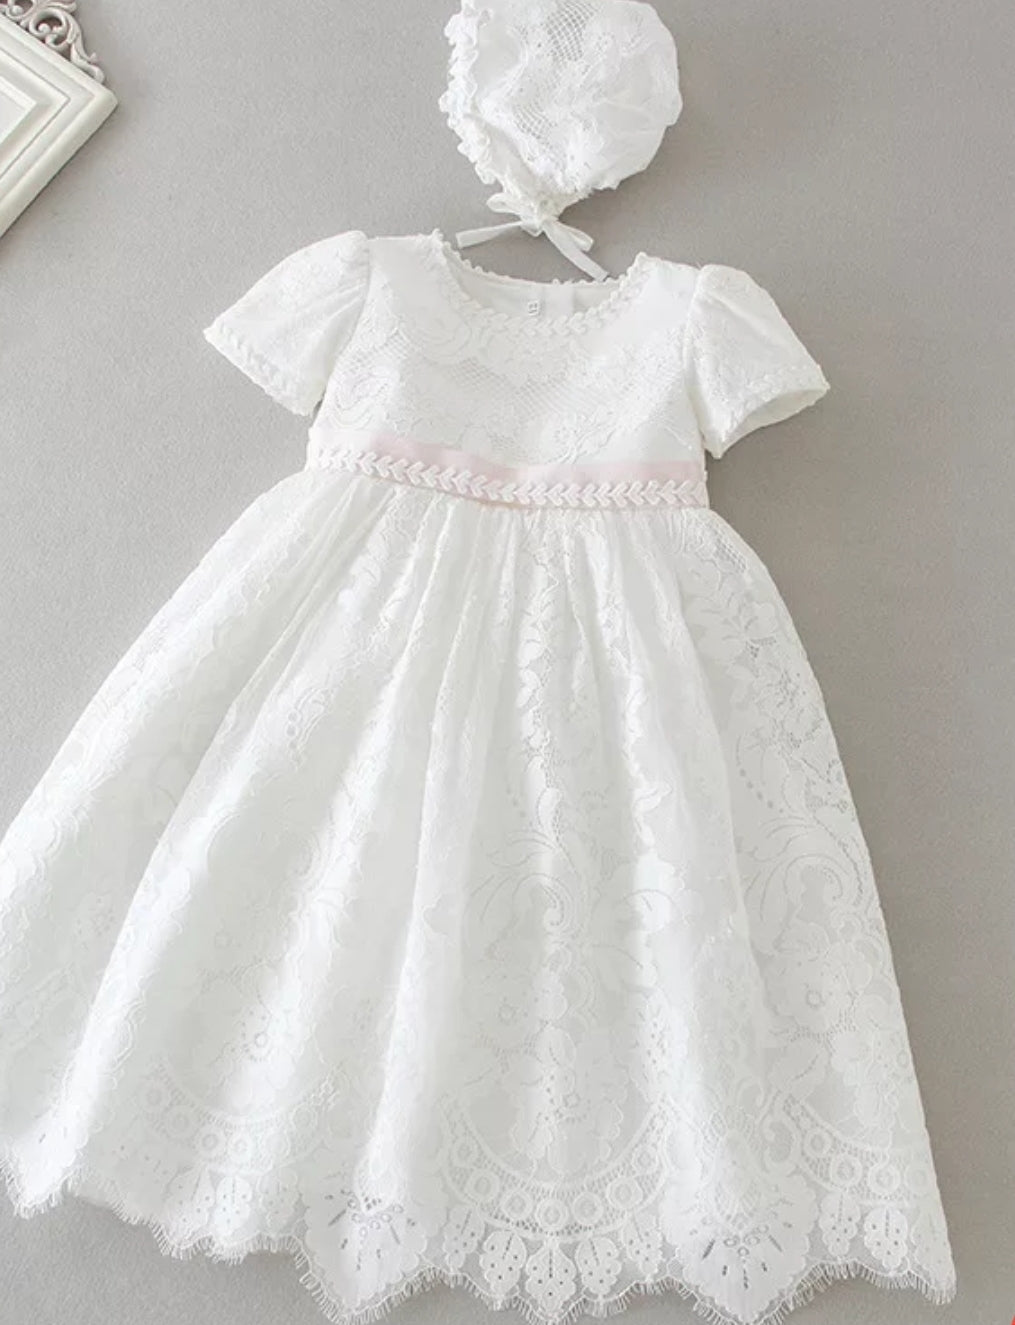 Pink trim lace christening dress